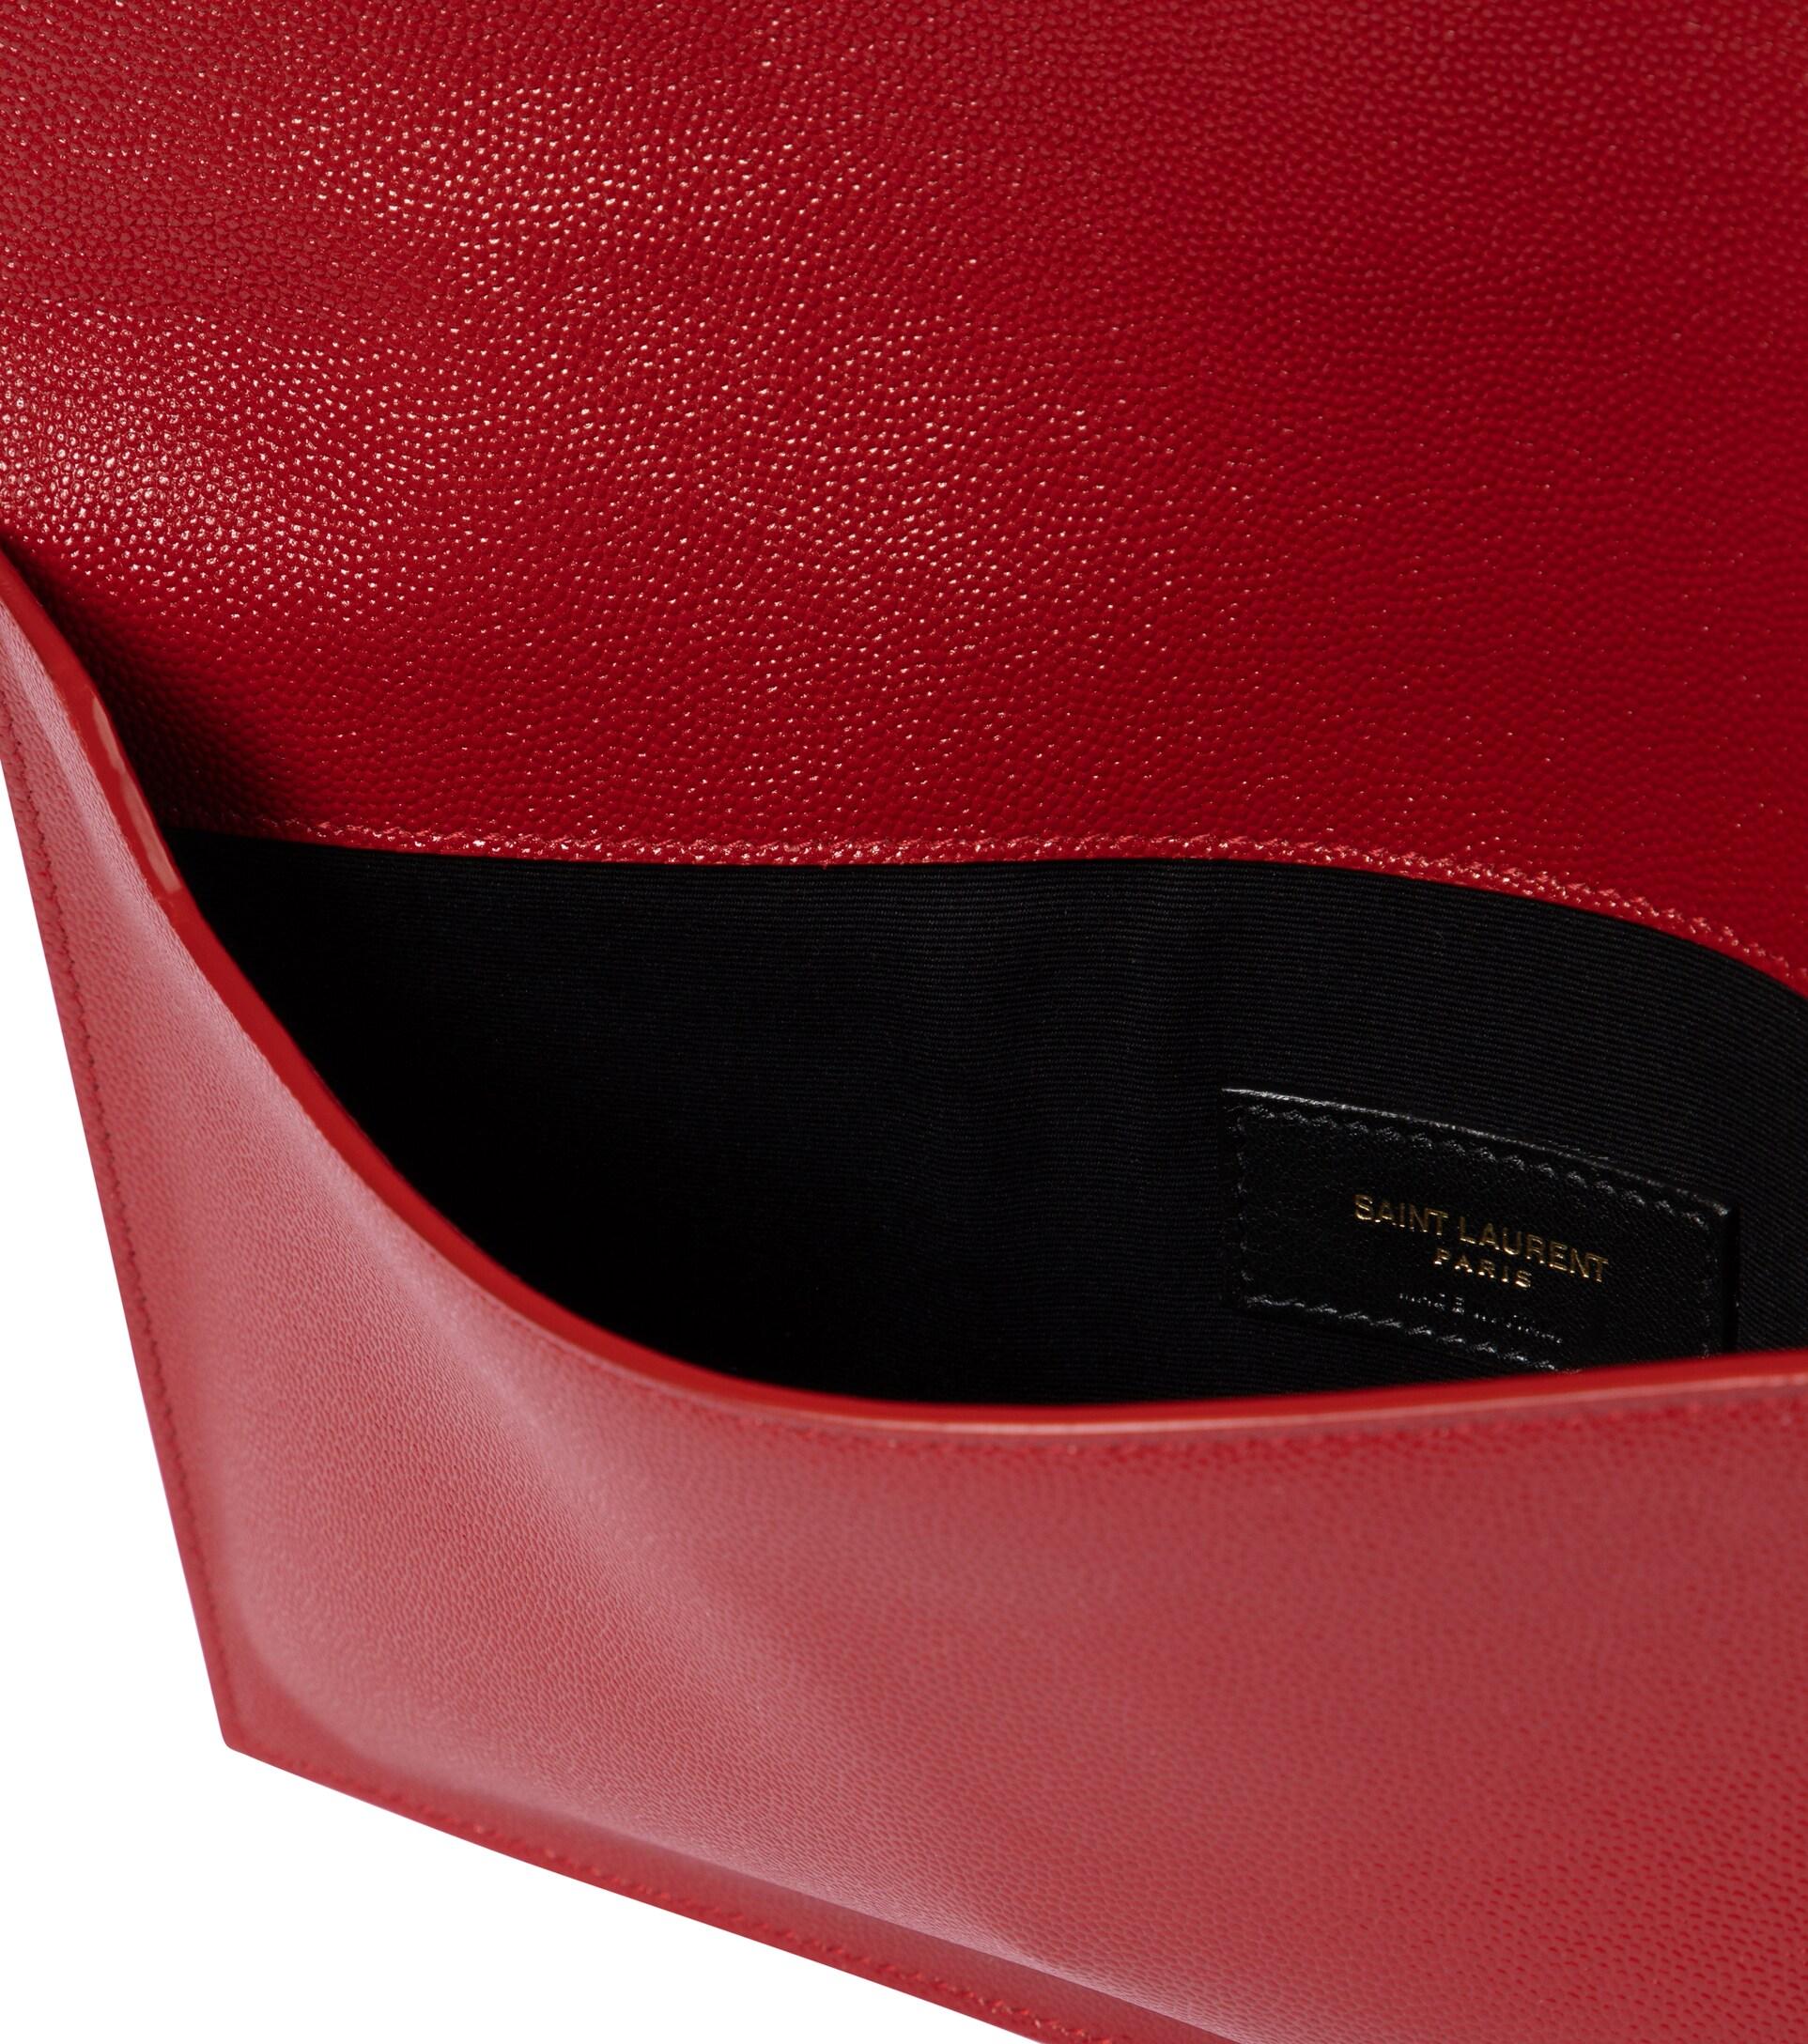 Saint Laurent Uptown leather-trimmed raffia clutch